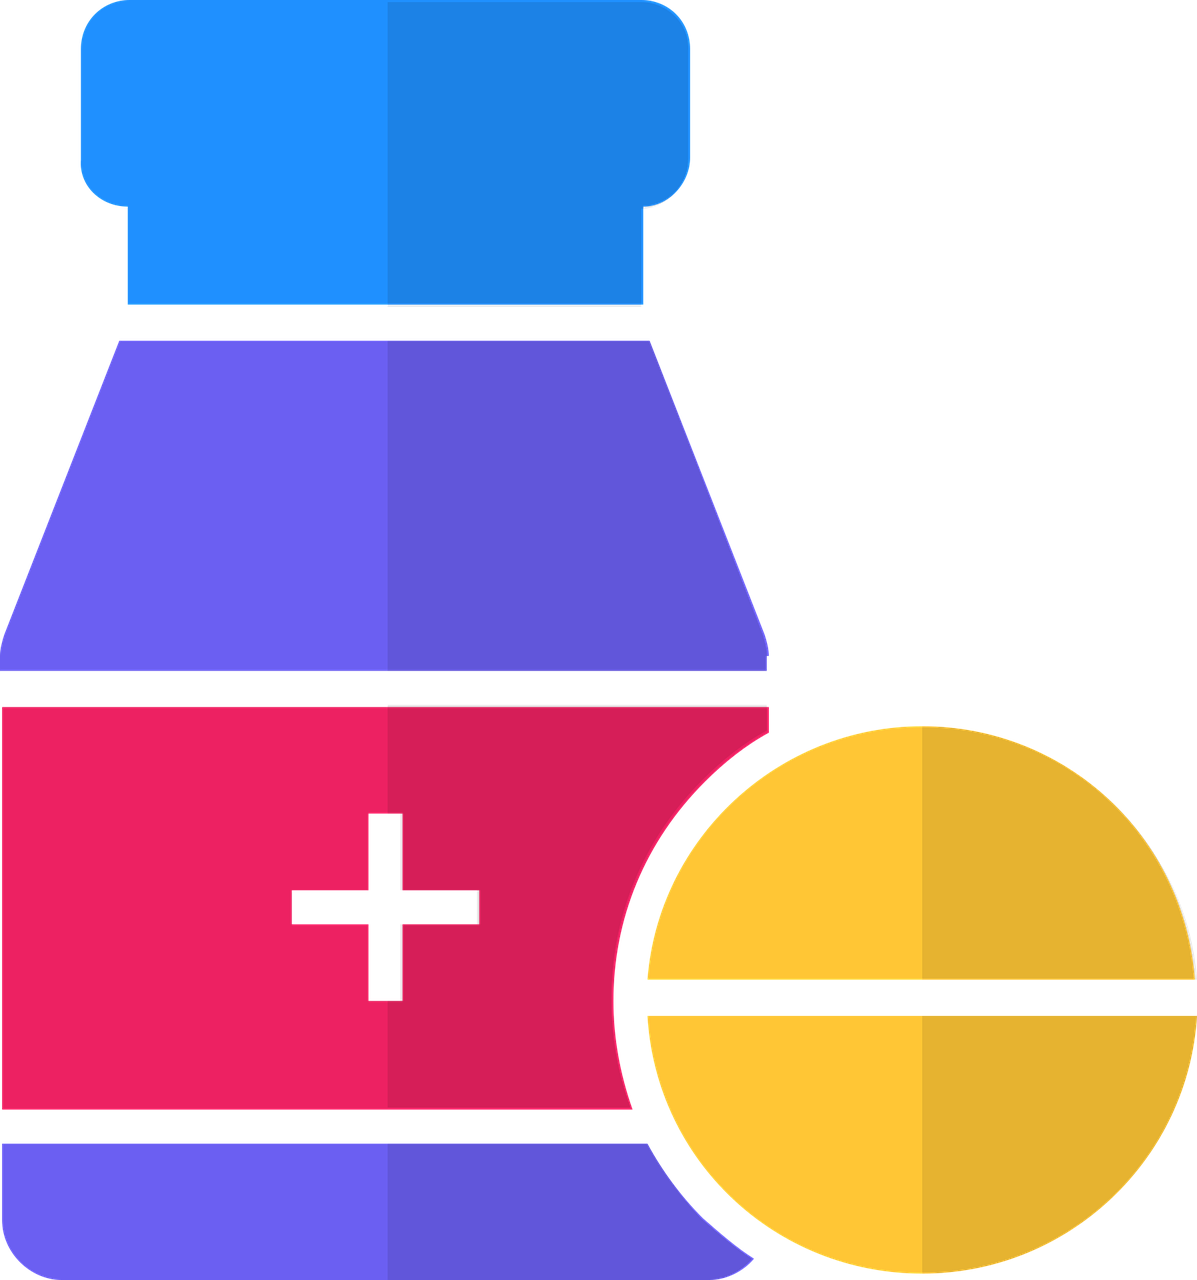 Illustration of a prescription bottle on the what is Medicare diagram